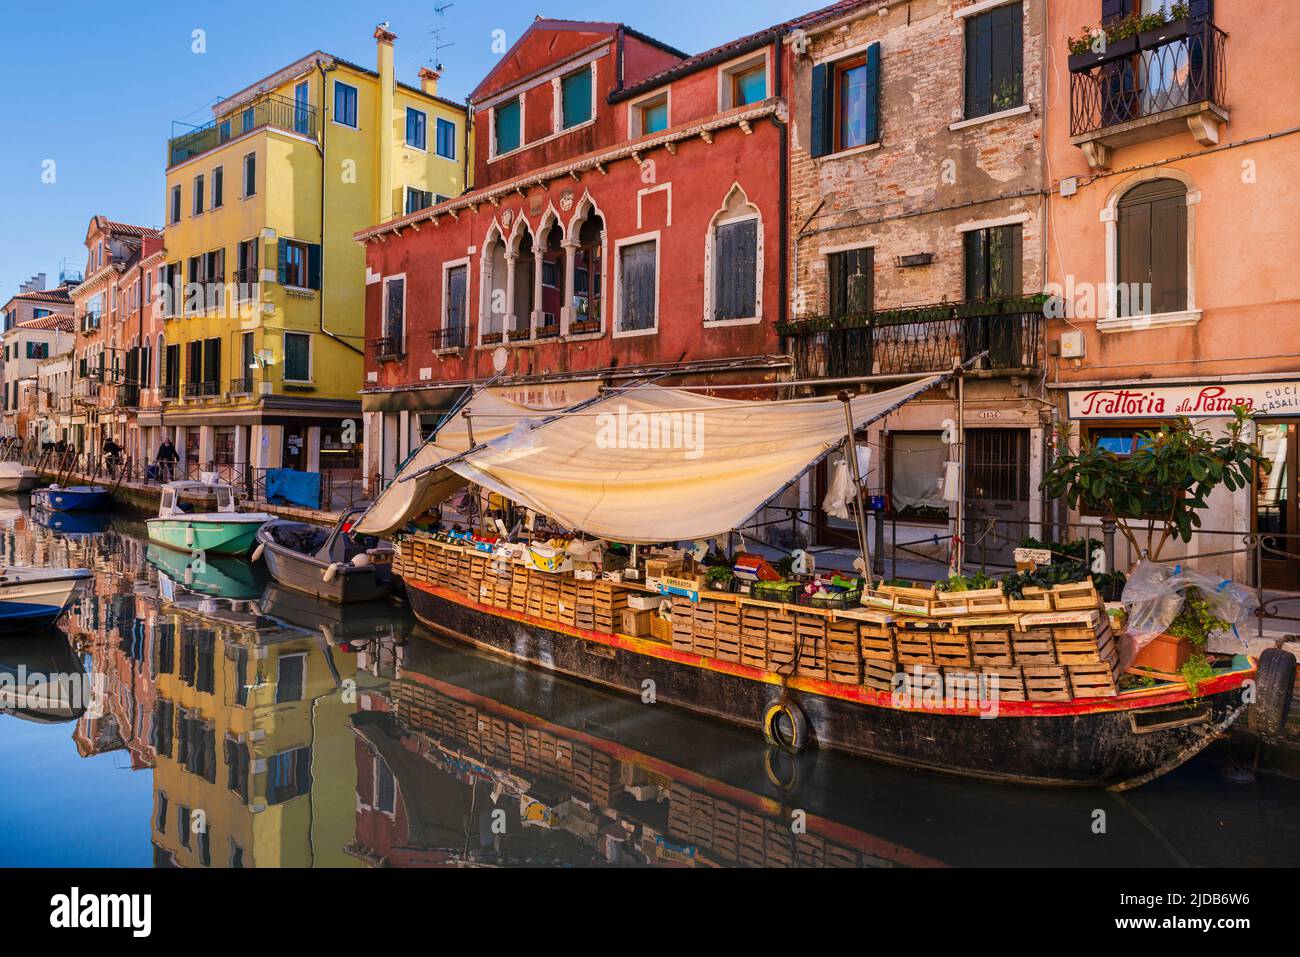 Vegetable stall boat on Rio de S.Ana Castello district Venice, Italy Stock Photo